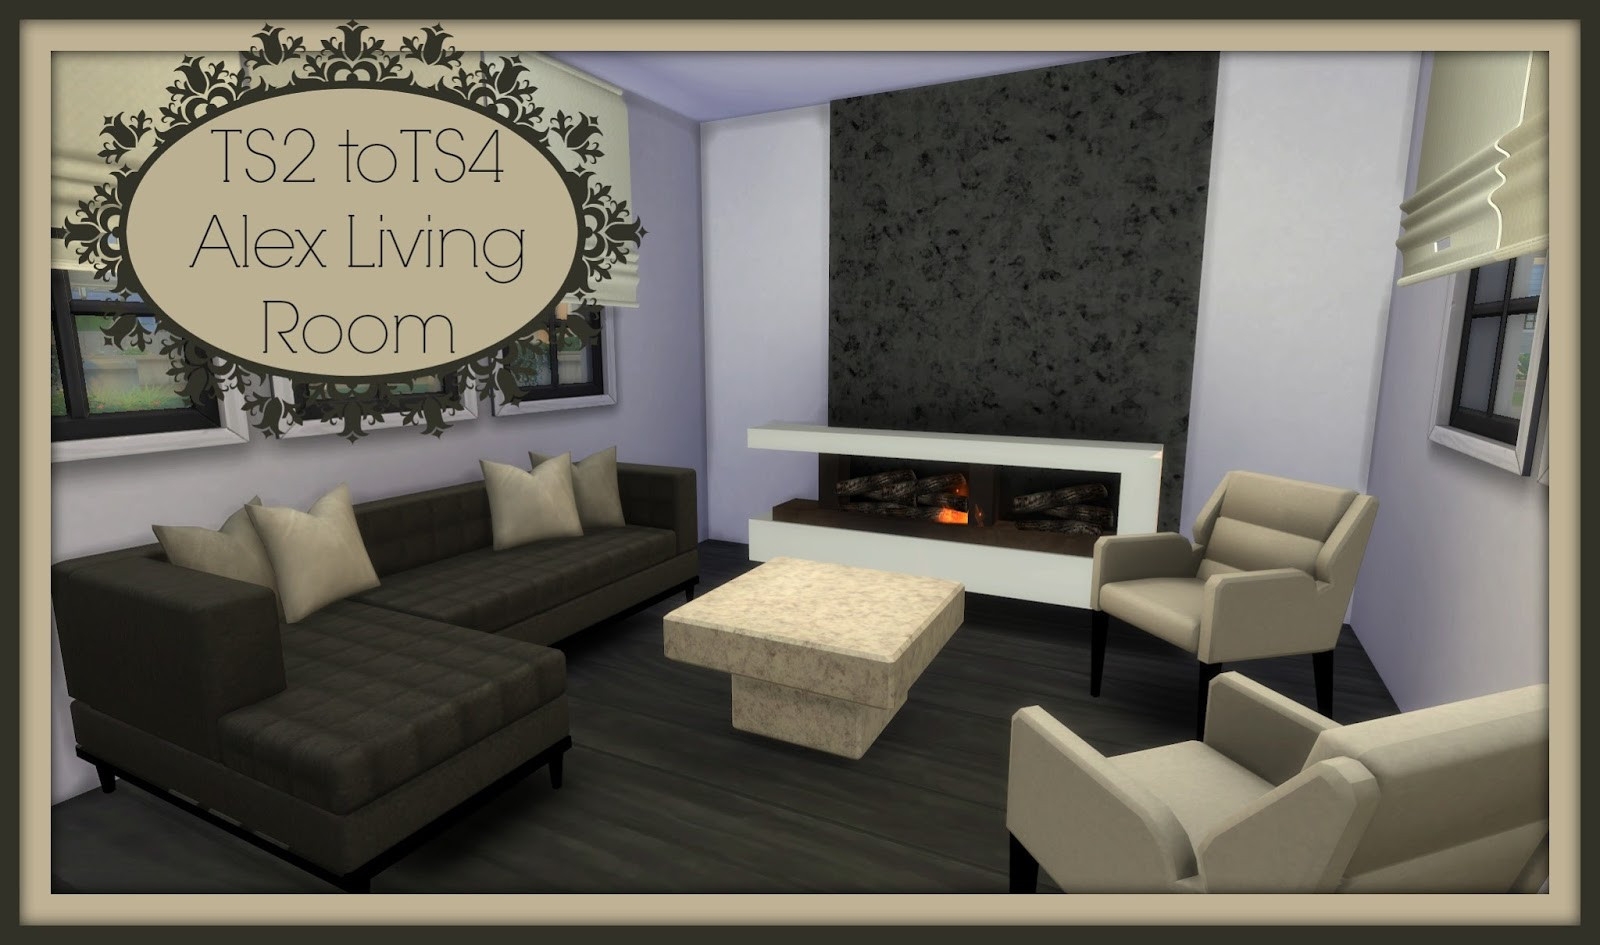 Sims 4 Living Room Ideas
 Sims 4 TS2 to TS4 Alex Living Room Dinha